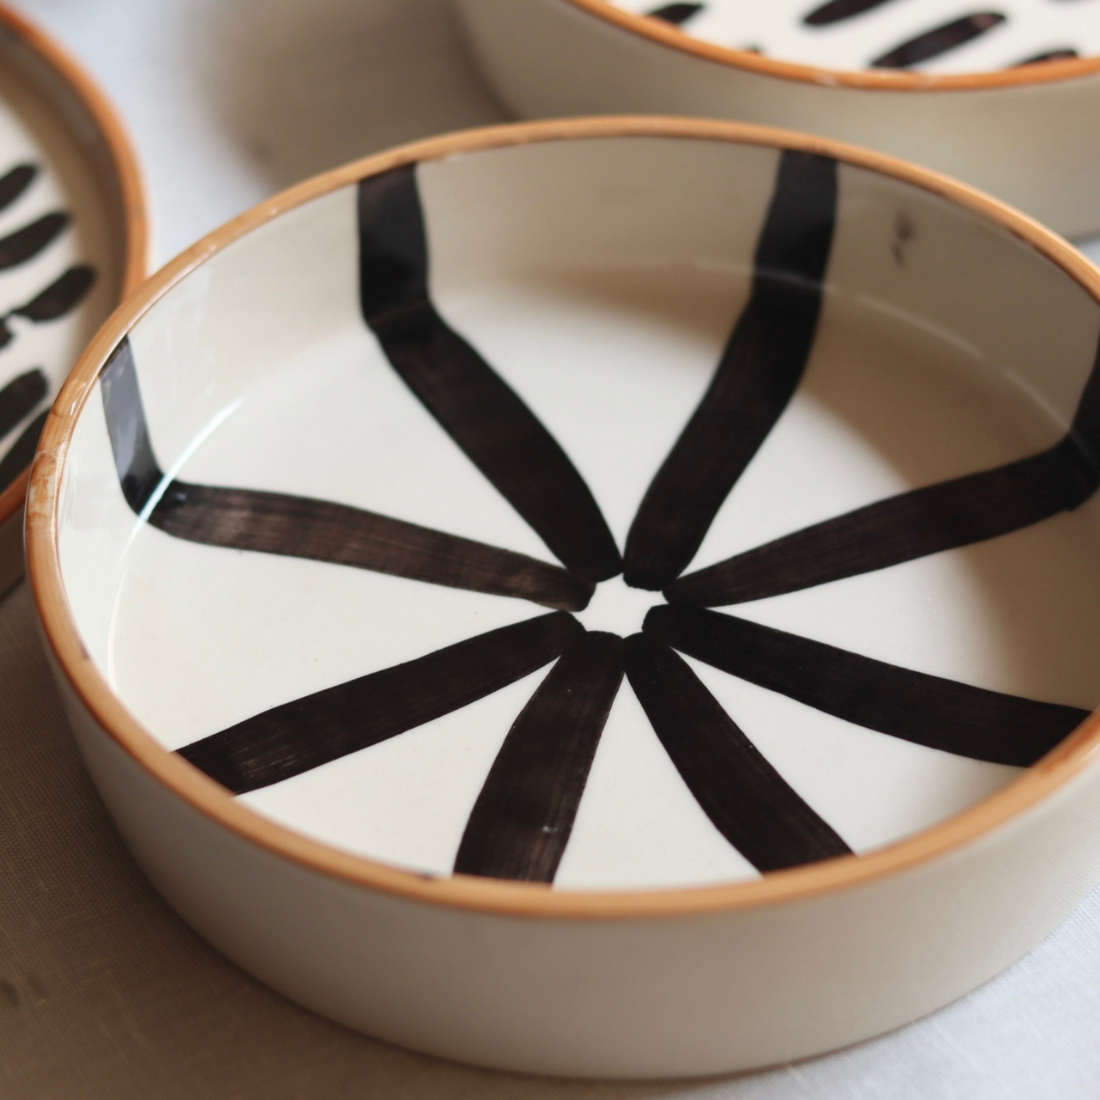 Handmade ceramic wheel salad bowl